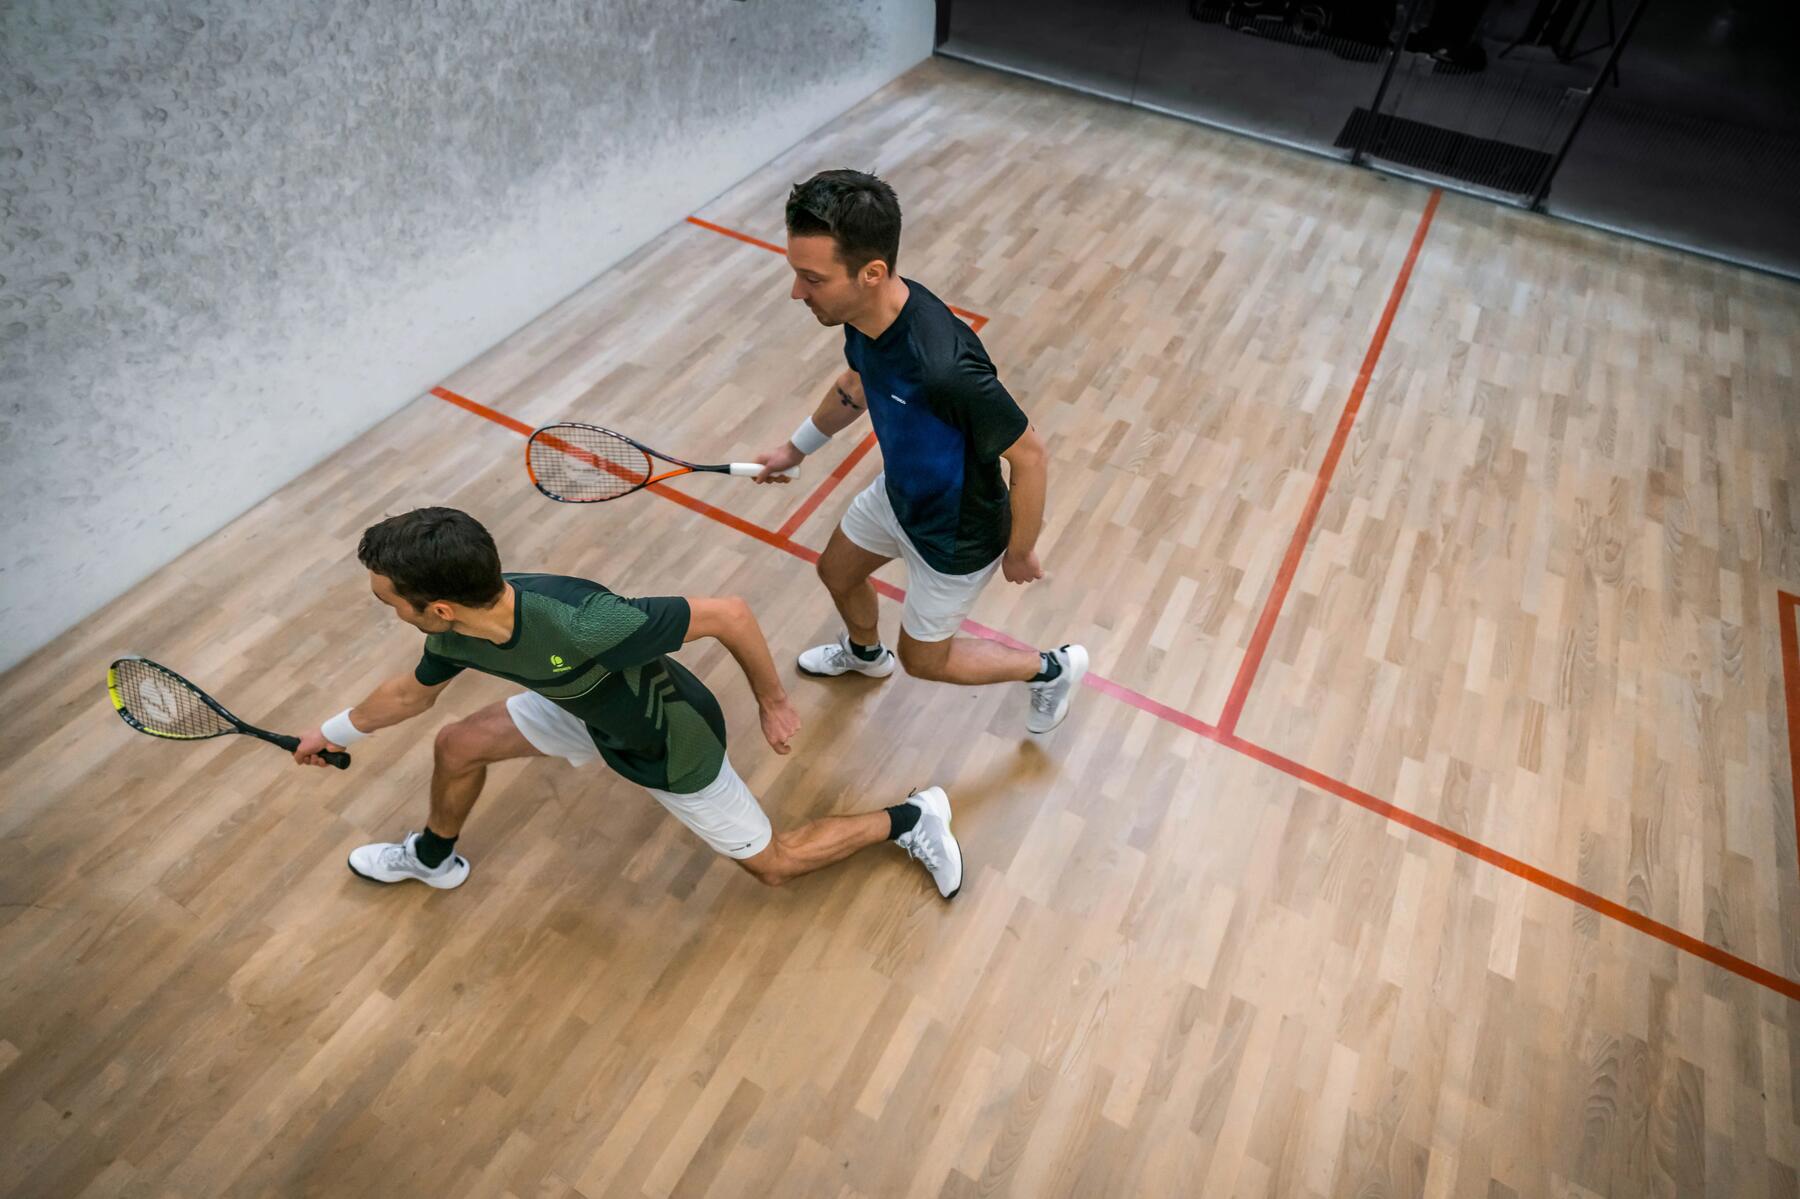 Hoe kies ik een squashracket?